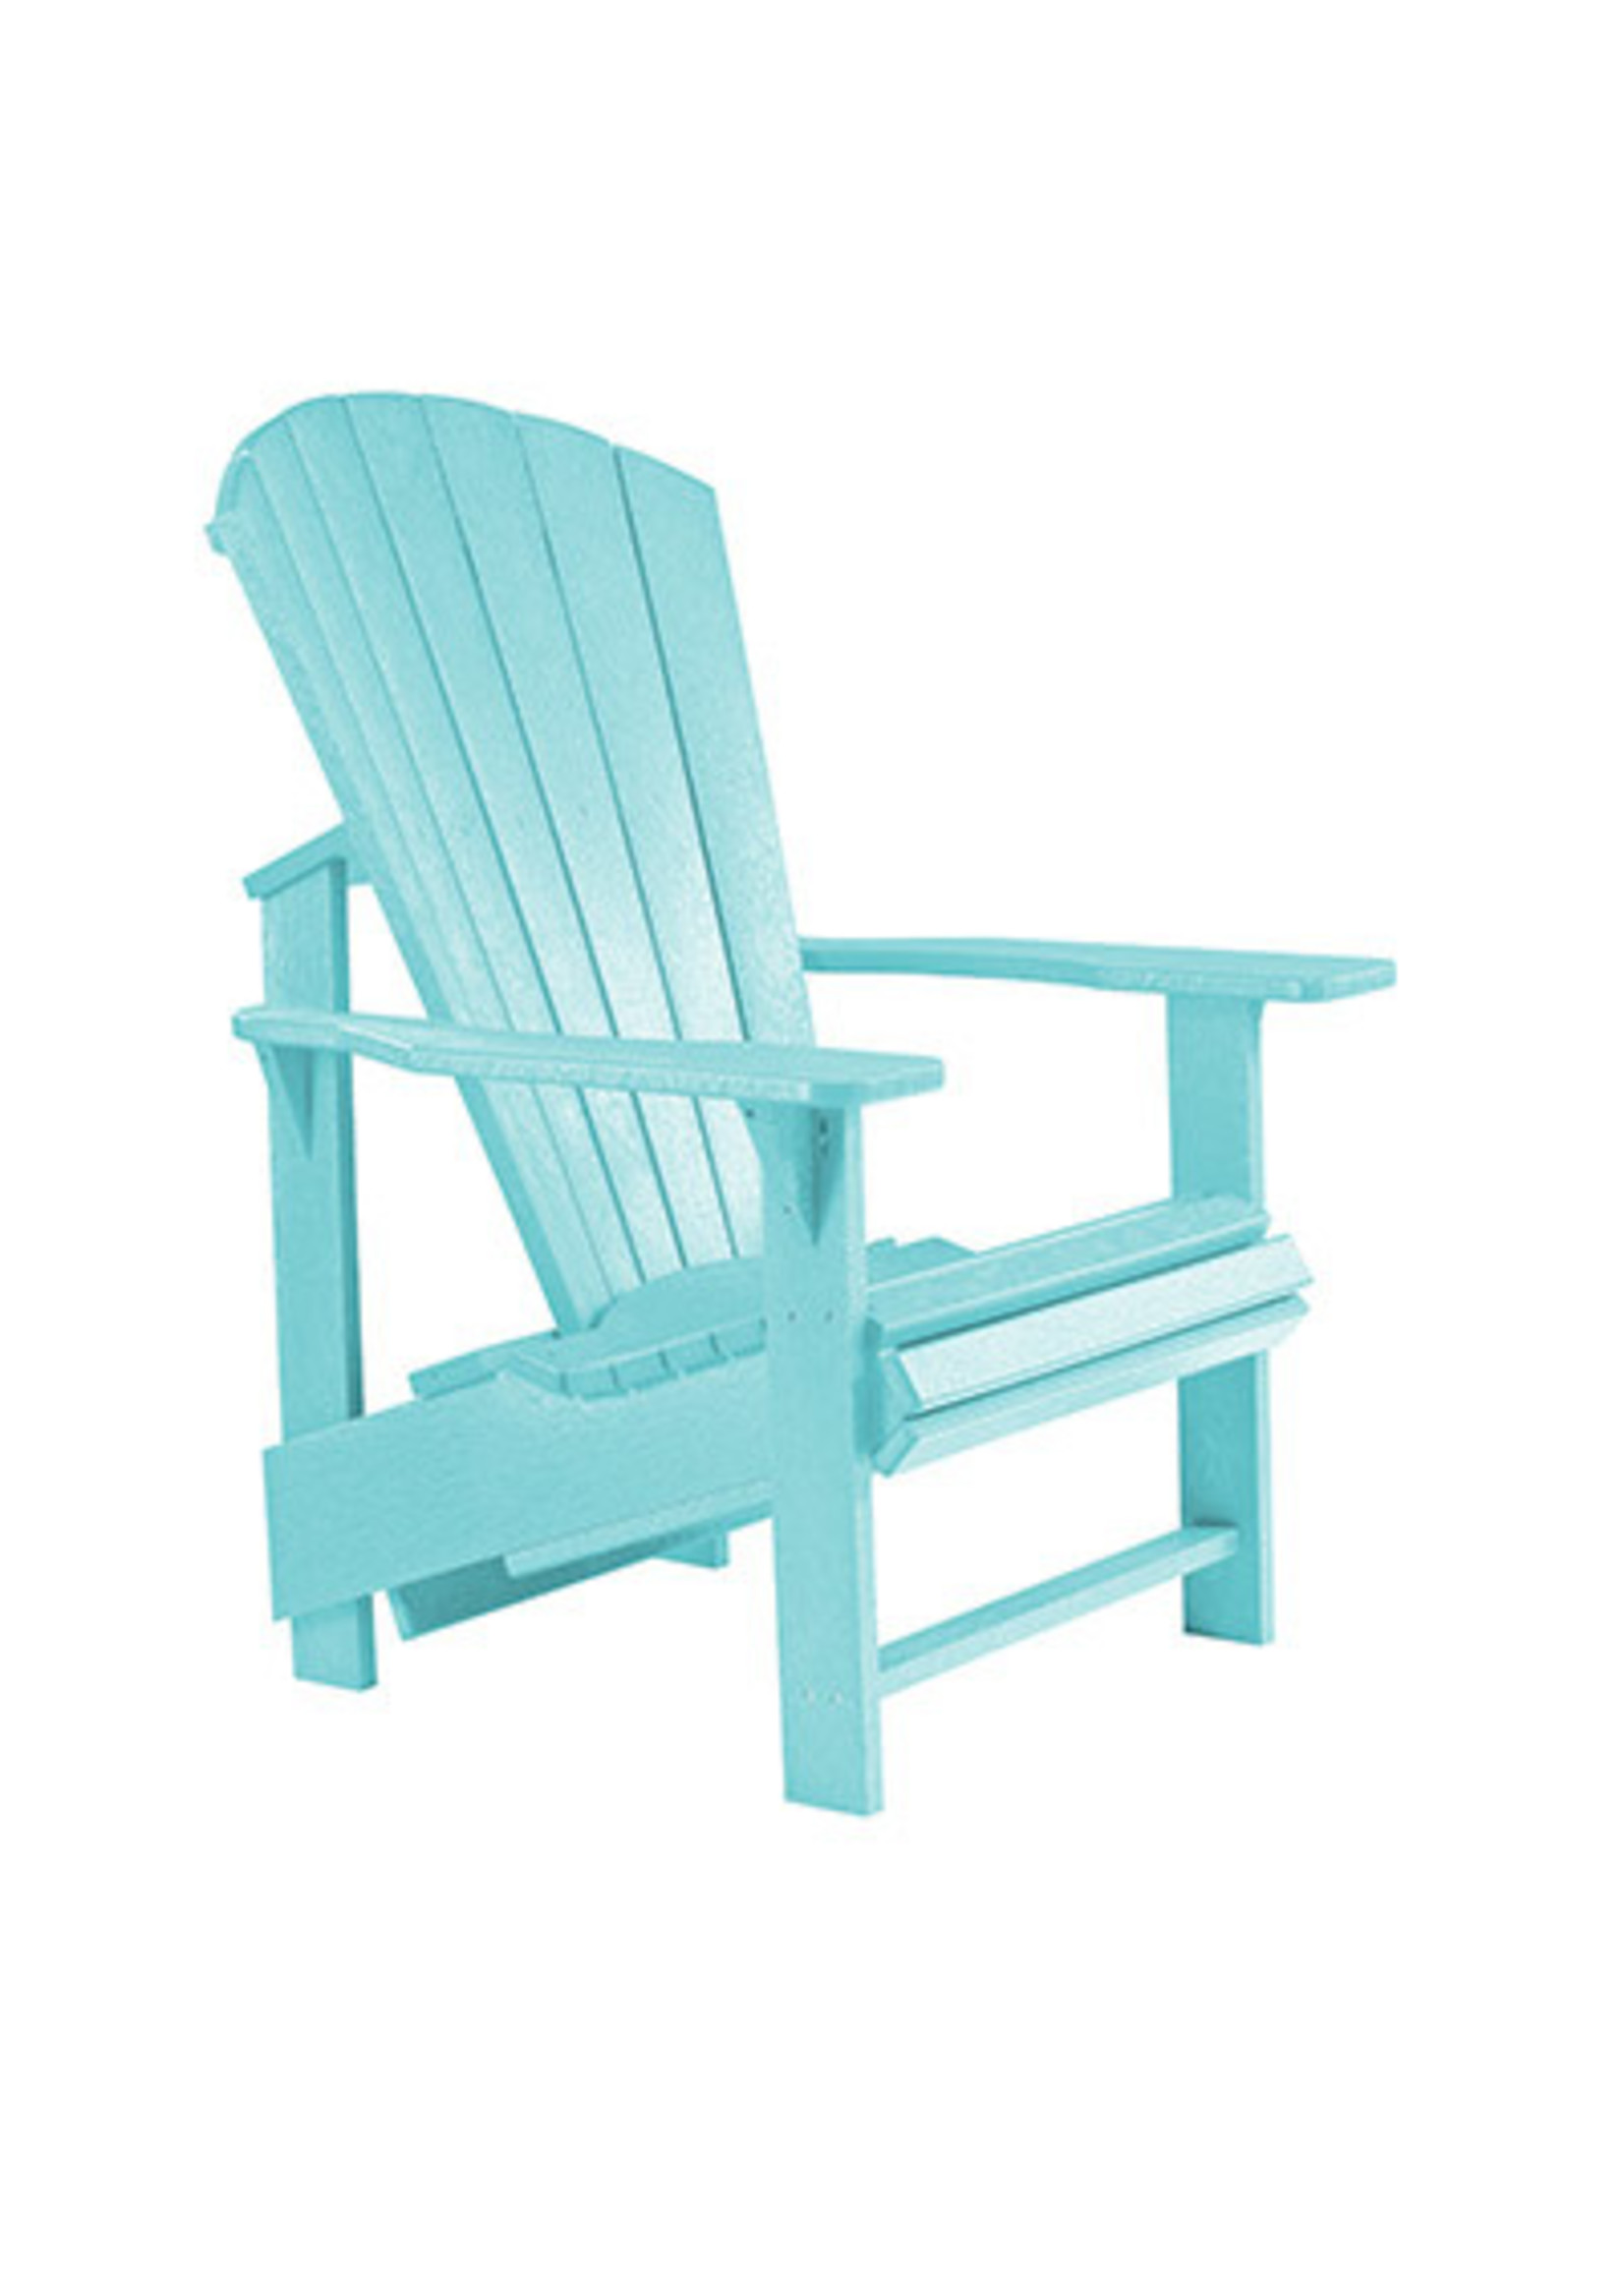 C.R. Plastic Products C03 * Upright Adirondack Chair, Generation Line